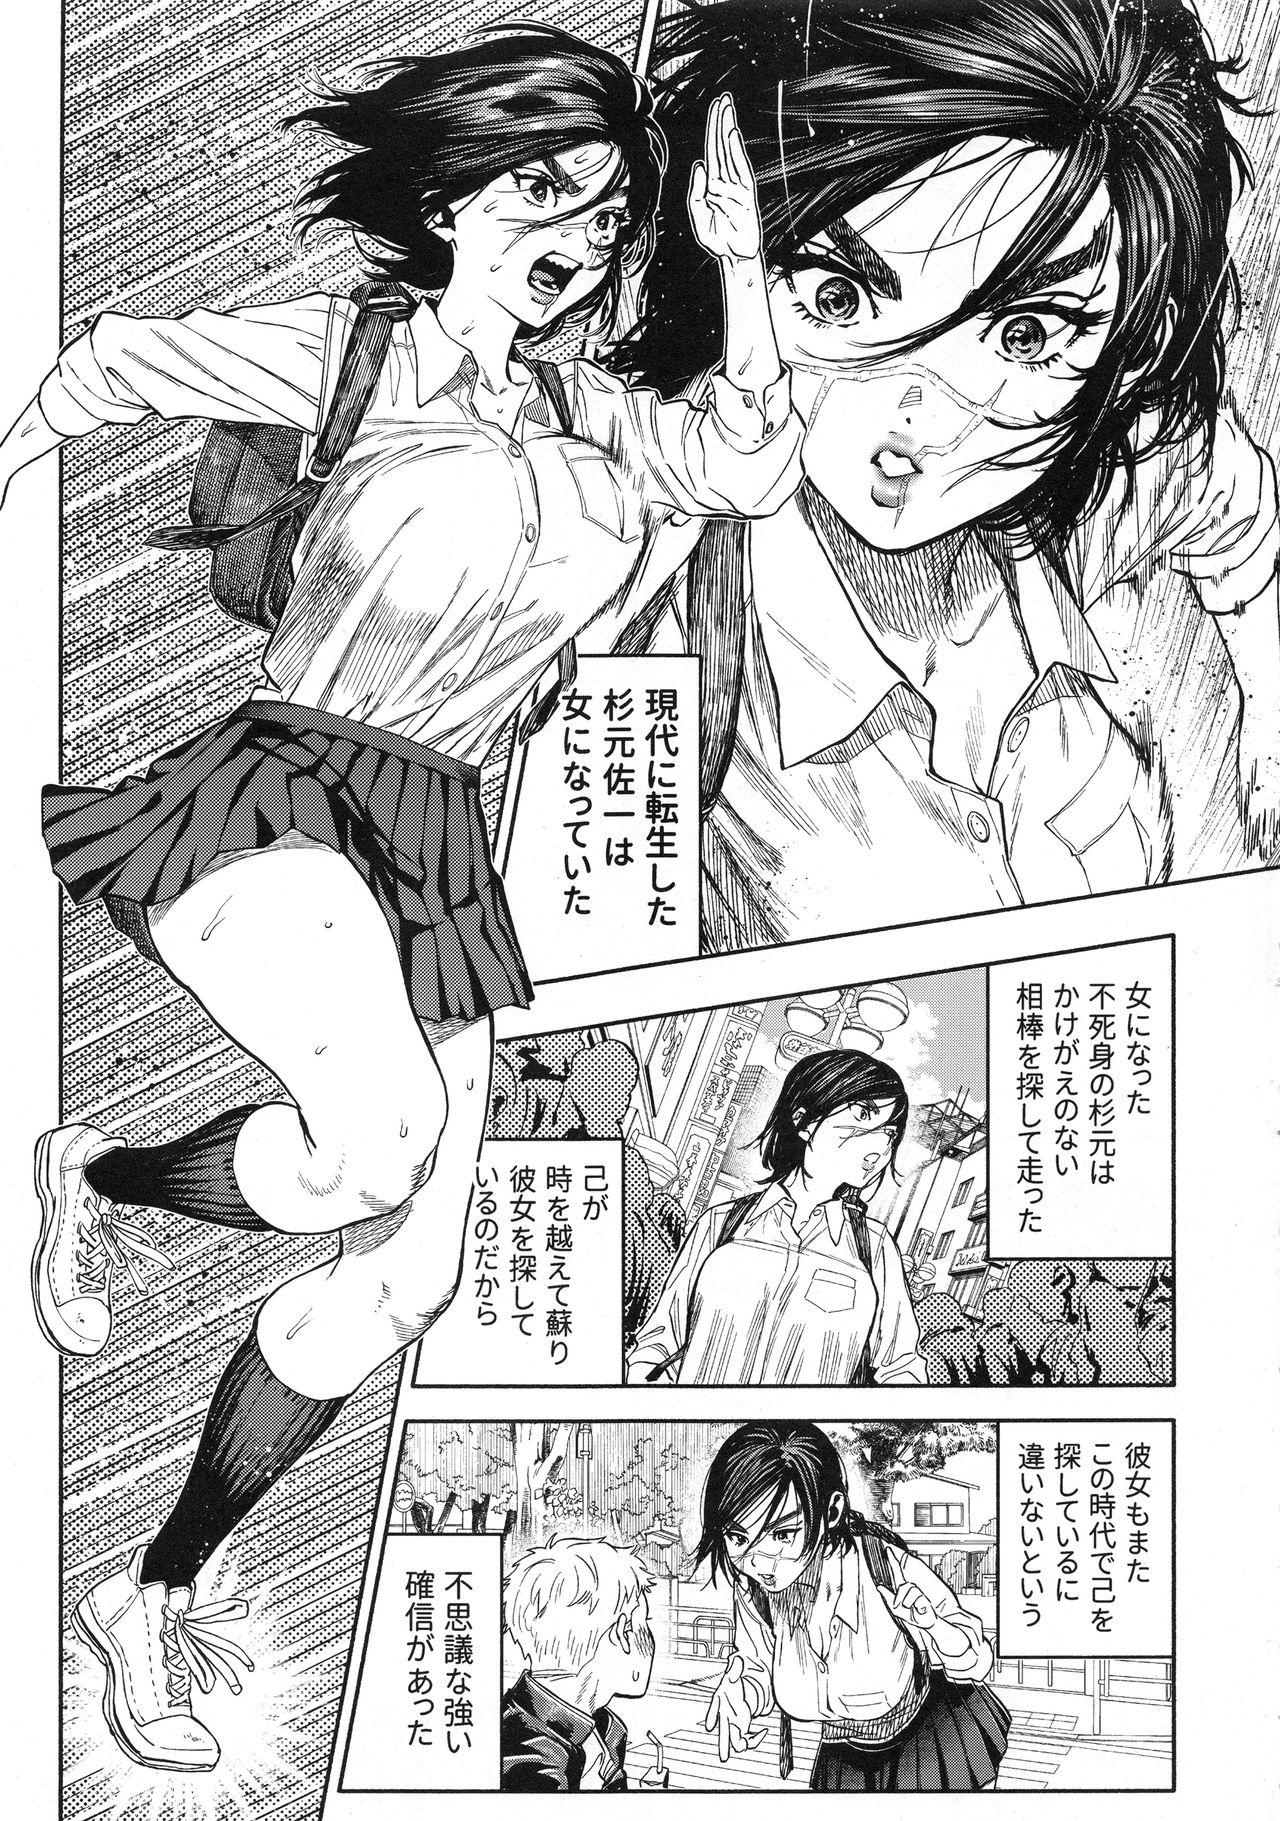 Submissive Koisugi - Golden kamuy Pretty - Page 3